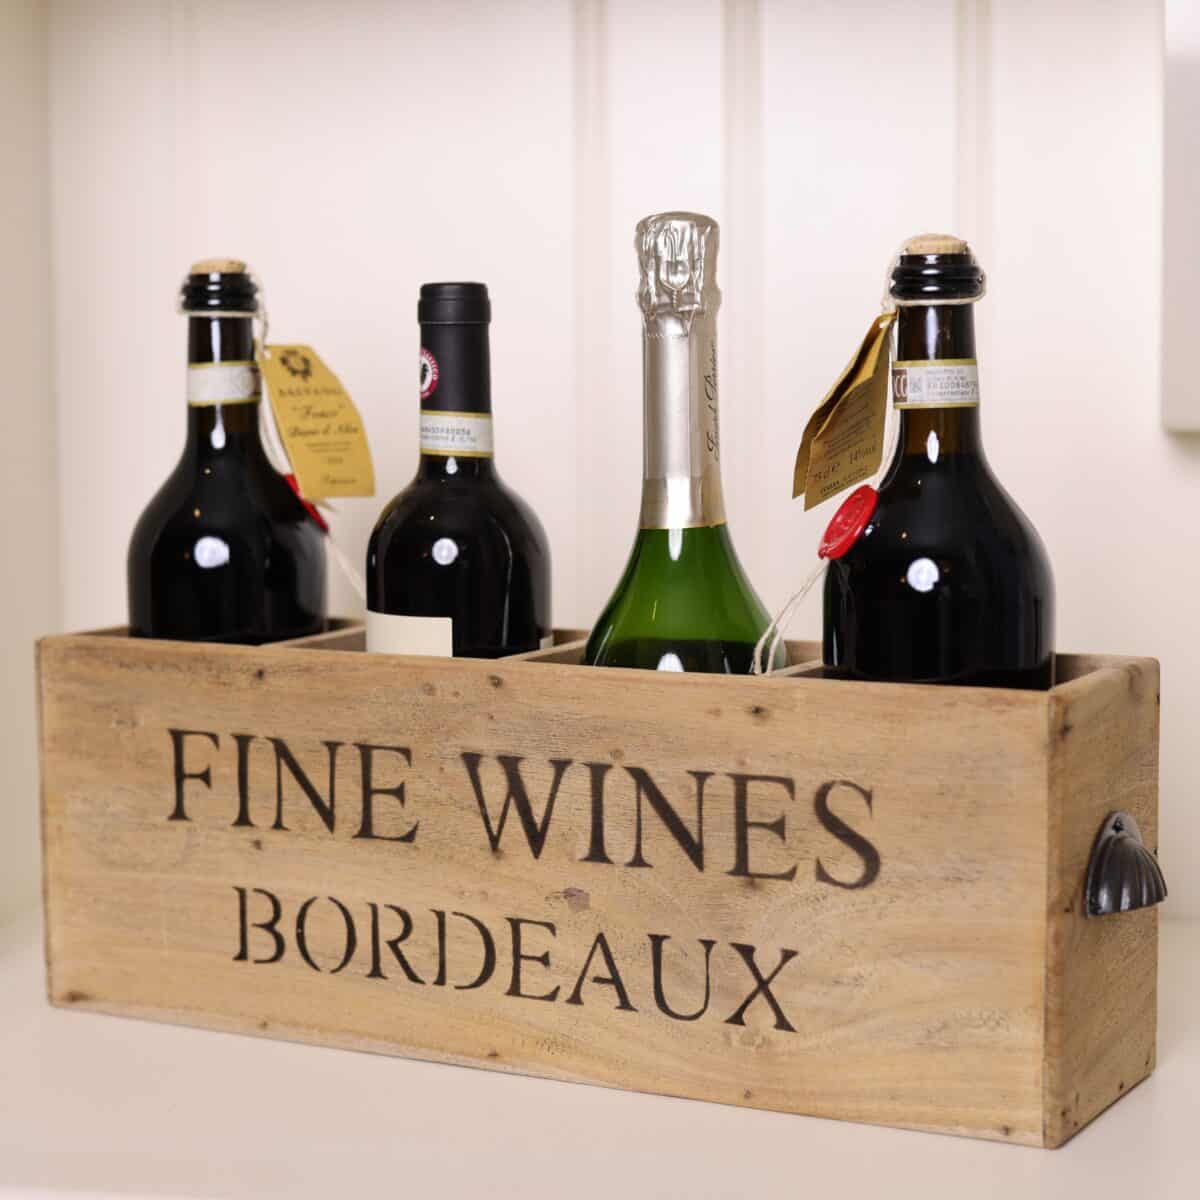 Bordeaux wooden vintage wine crate with 4 bottles inside. 